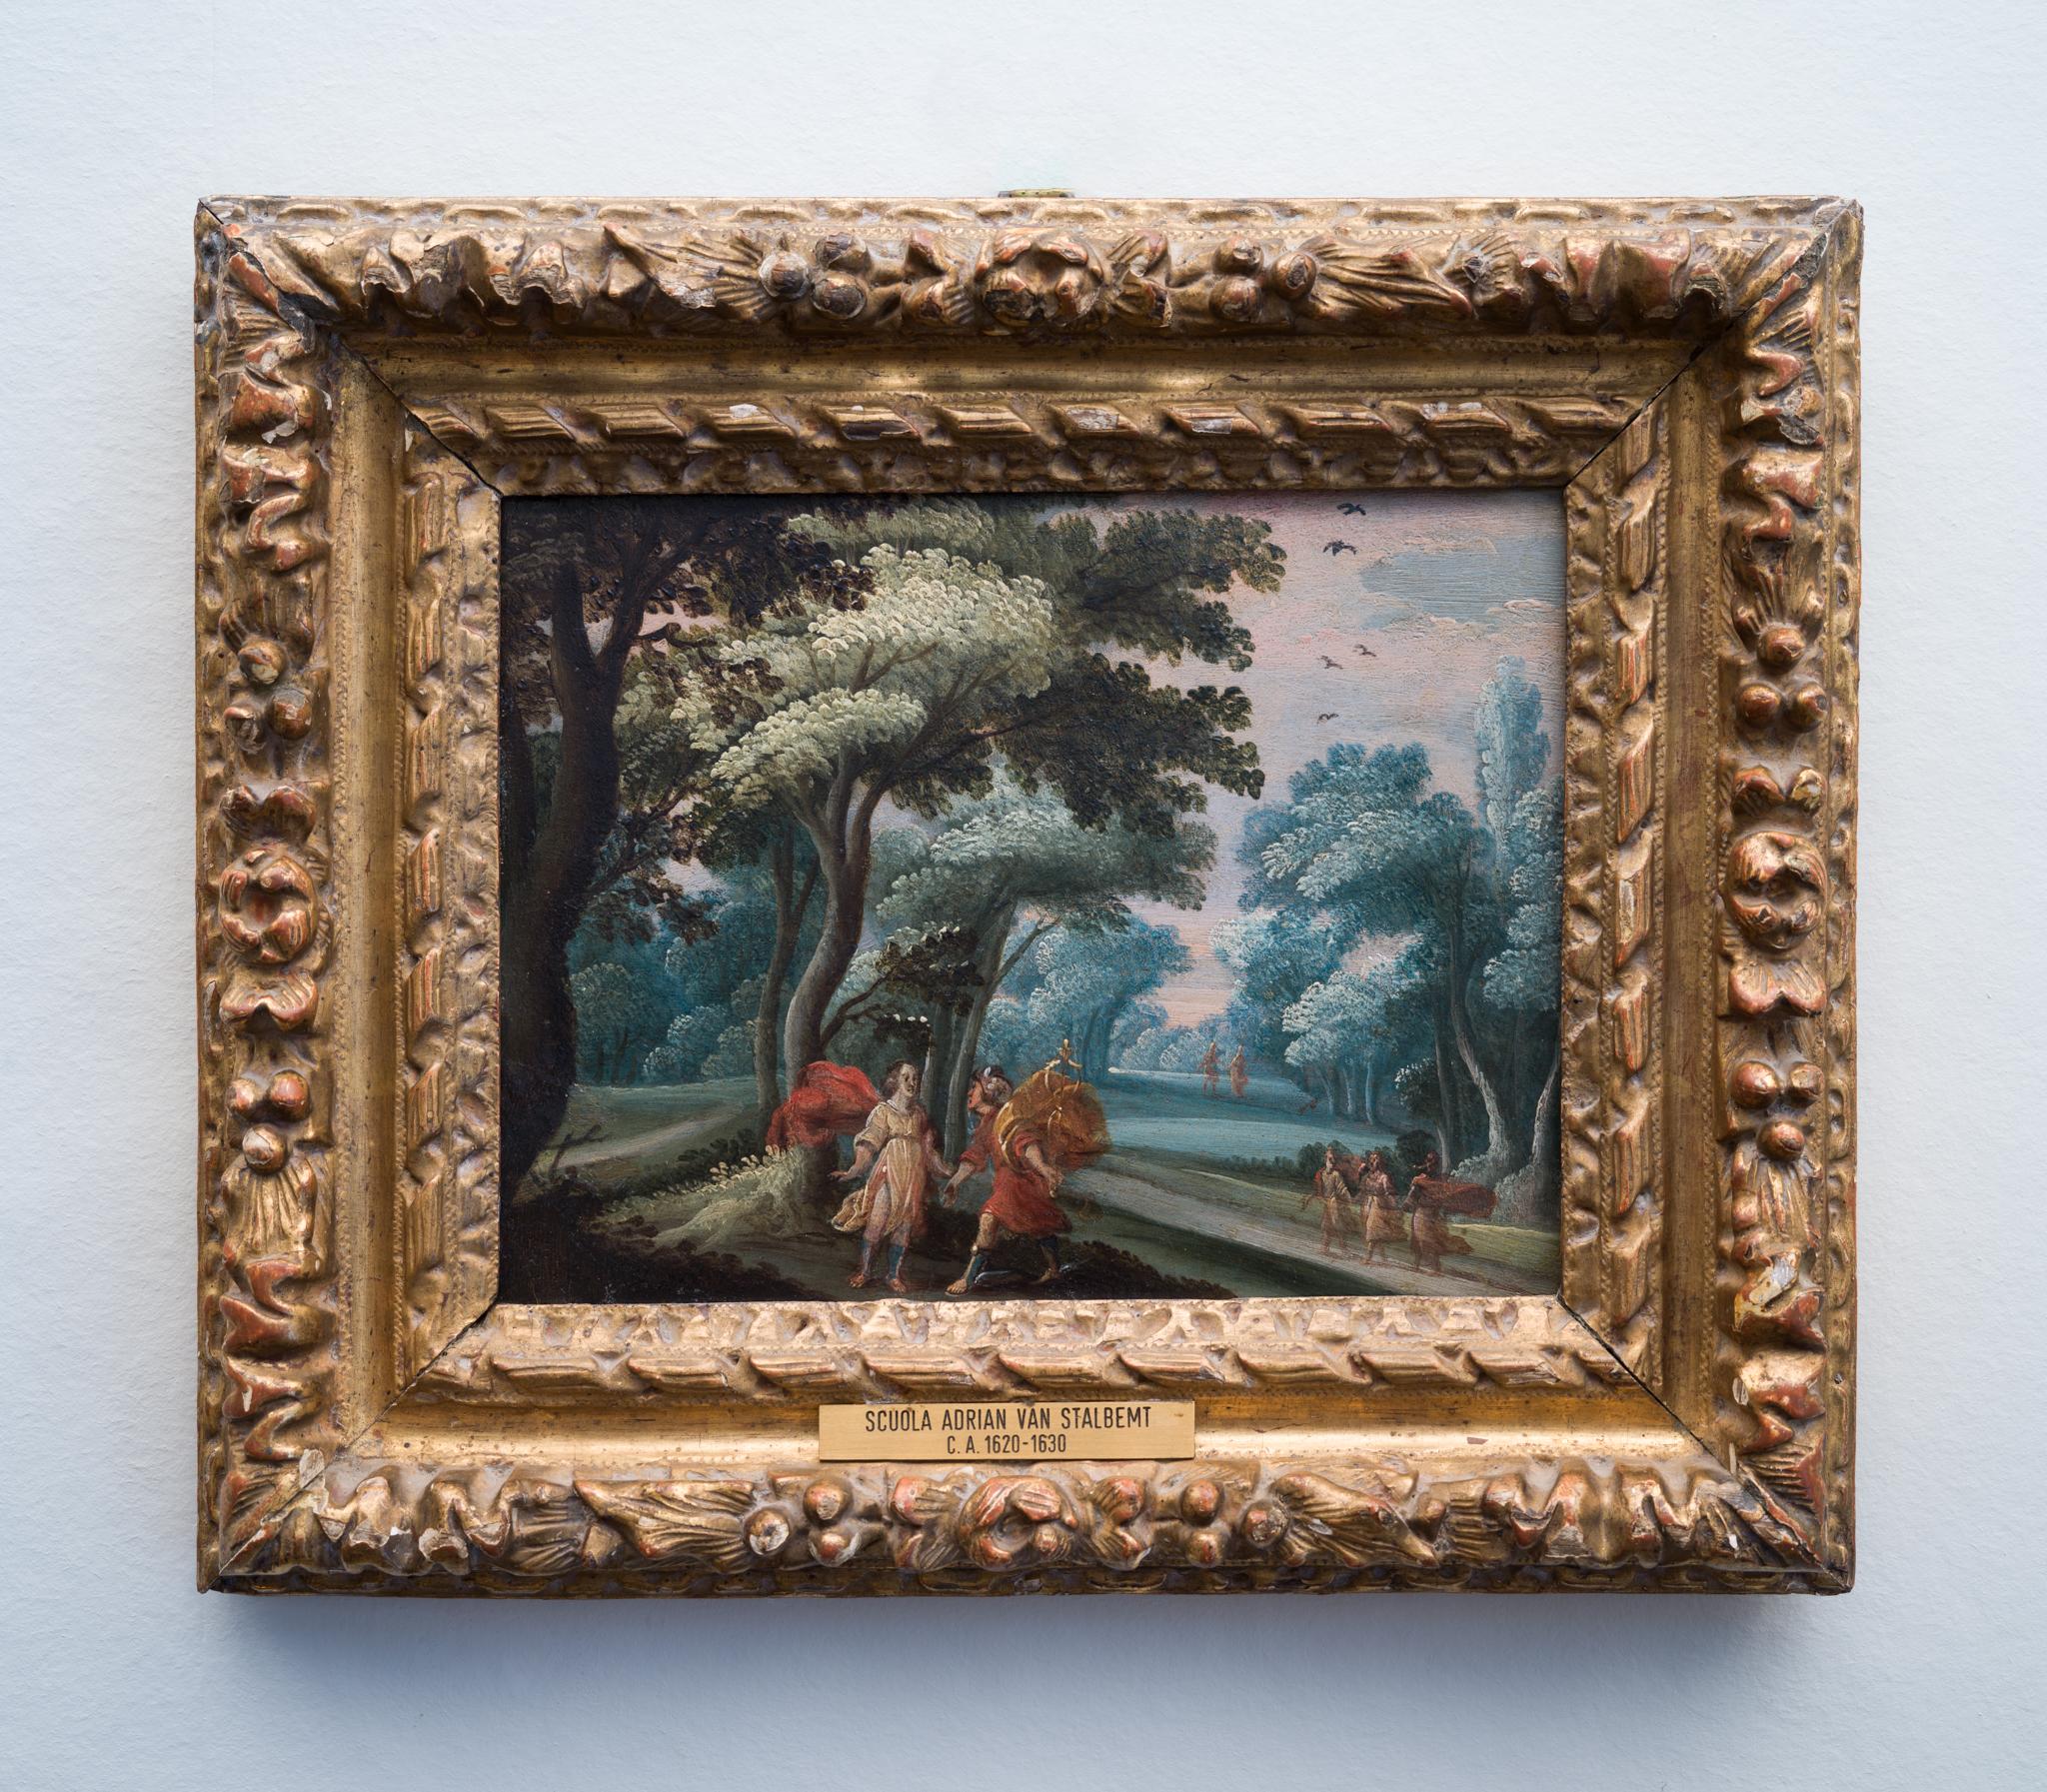 A 17th Century Mythological Scene - Old Masters Painting by Adriaen van Stalbemt